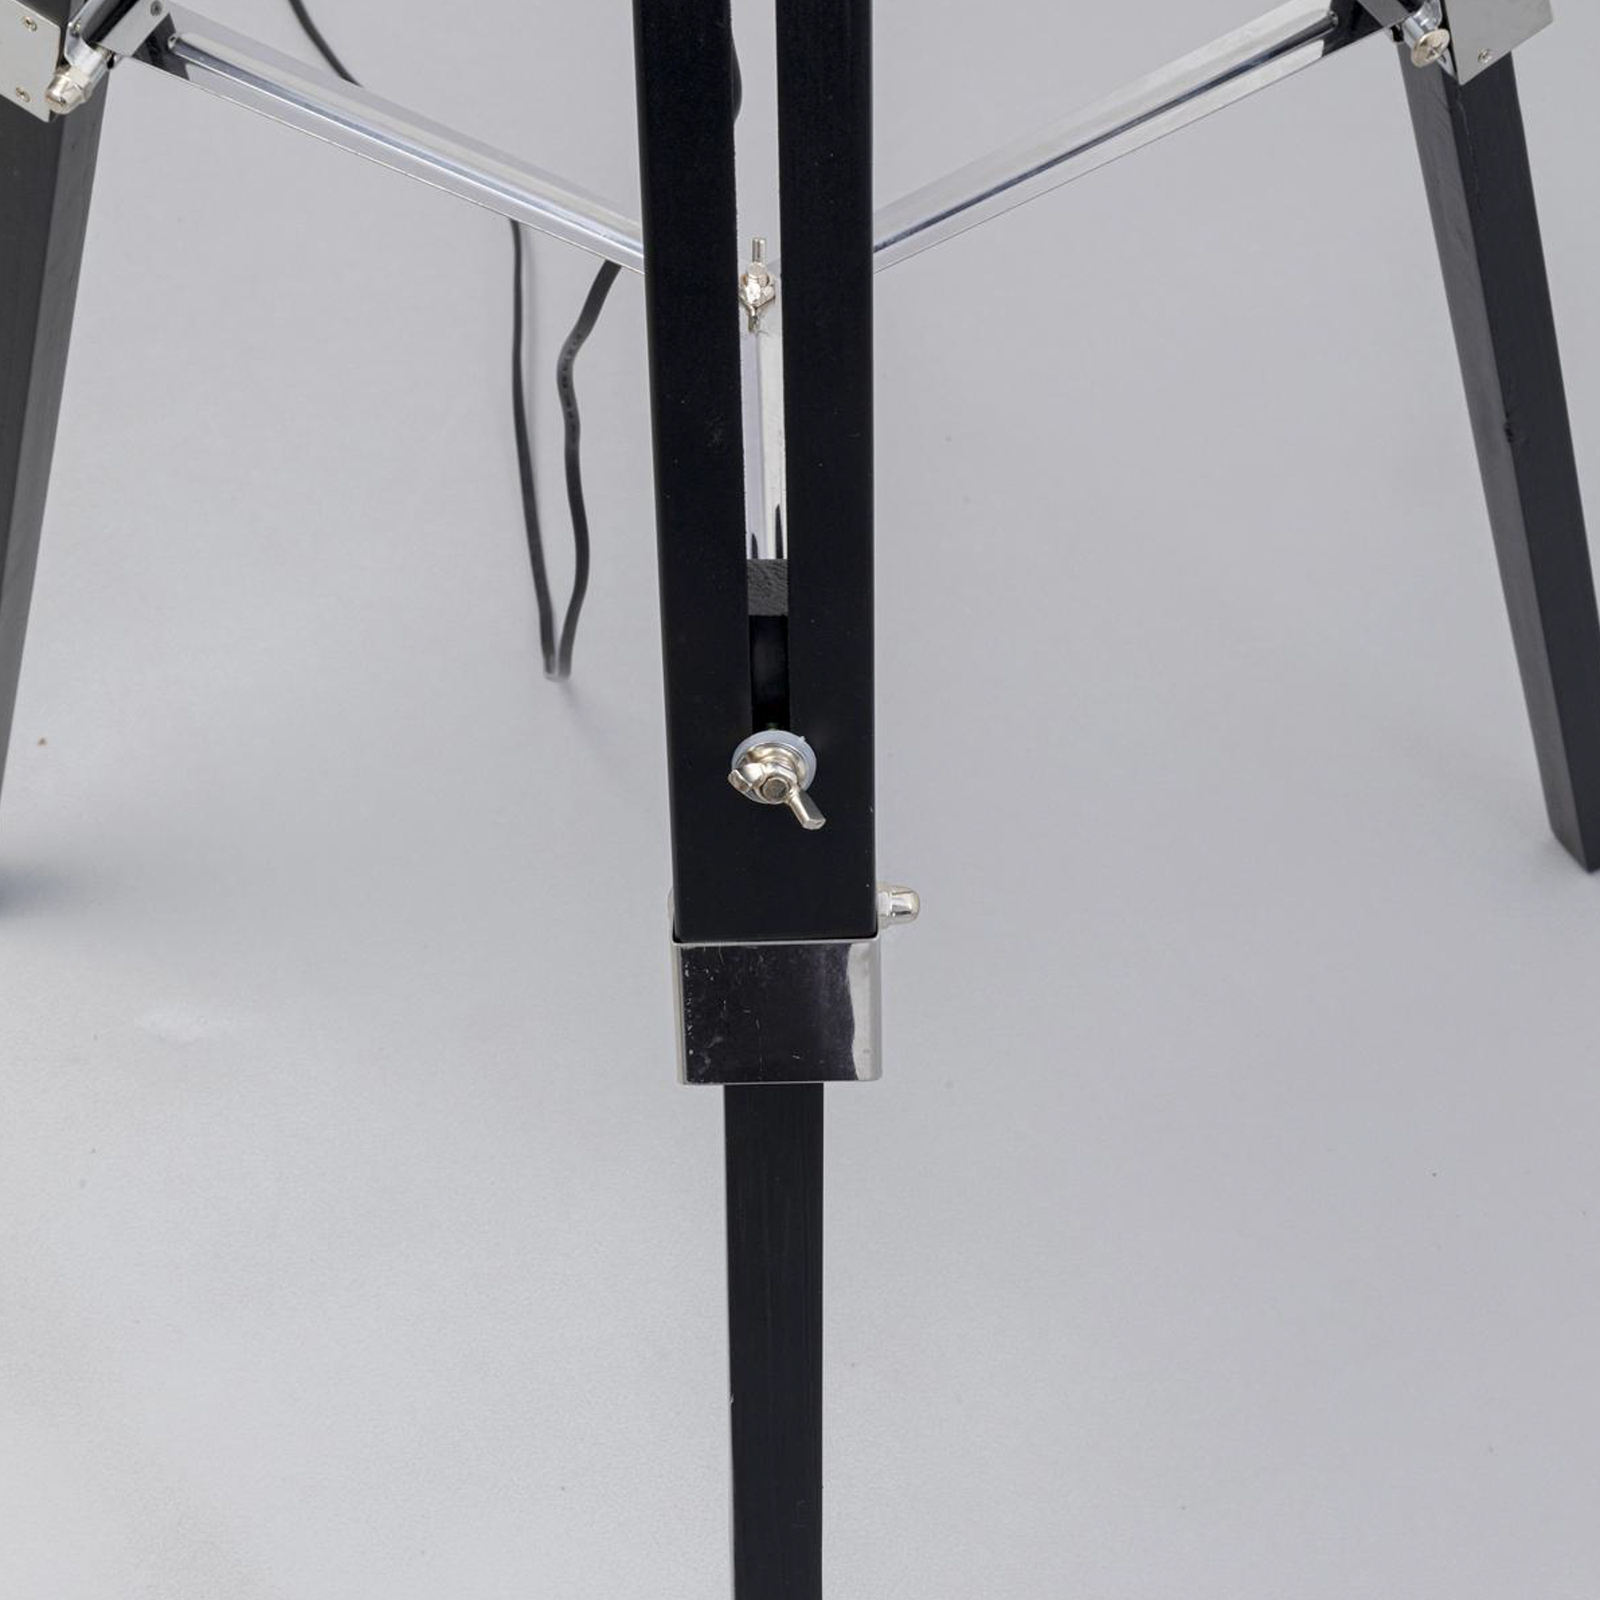 KARE Stehlampe Raquette, schwarz, Textil, Holz, Höhe 144 cm